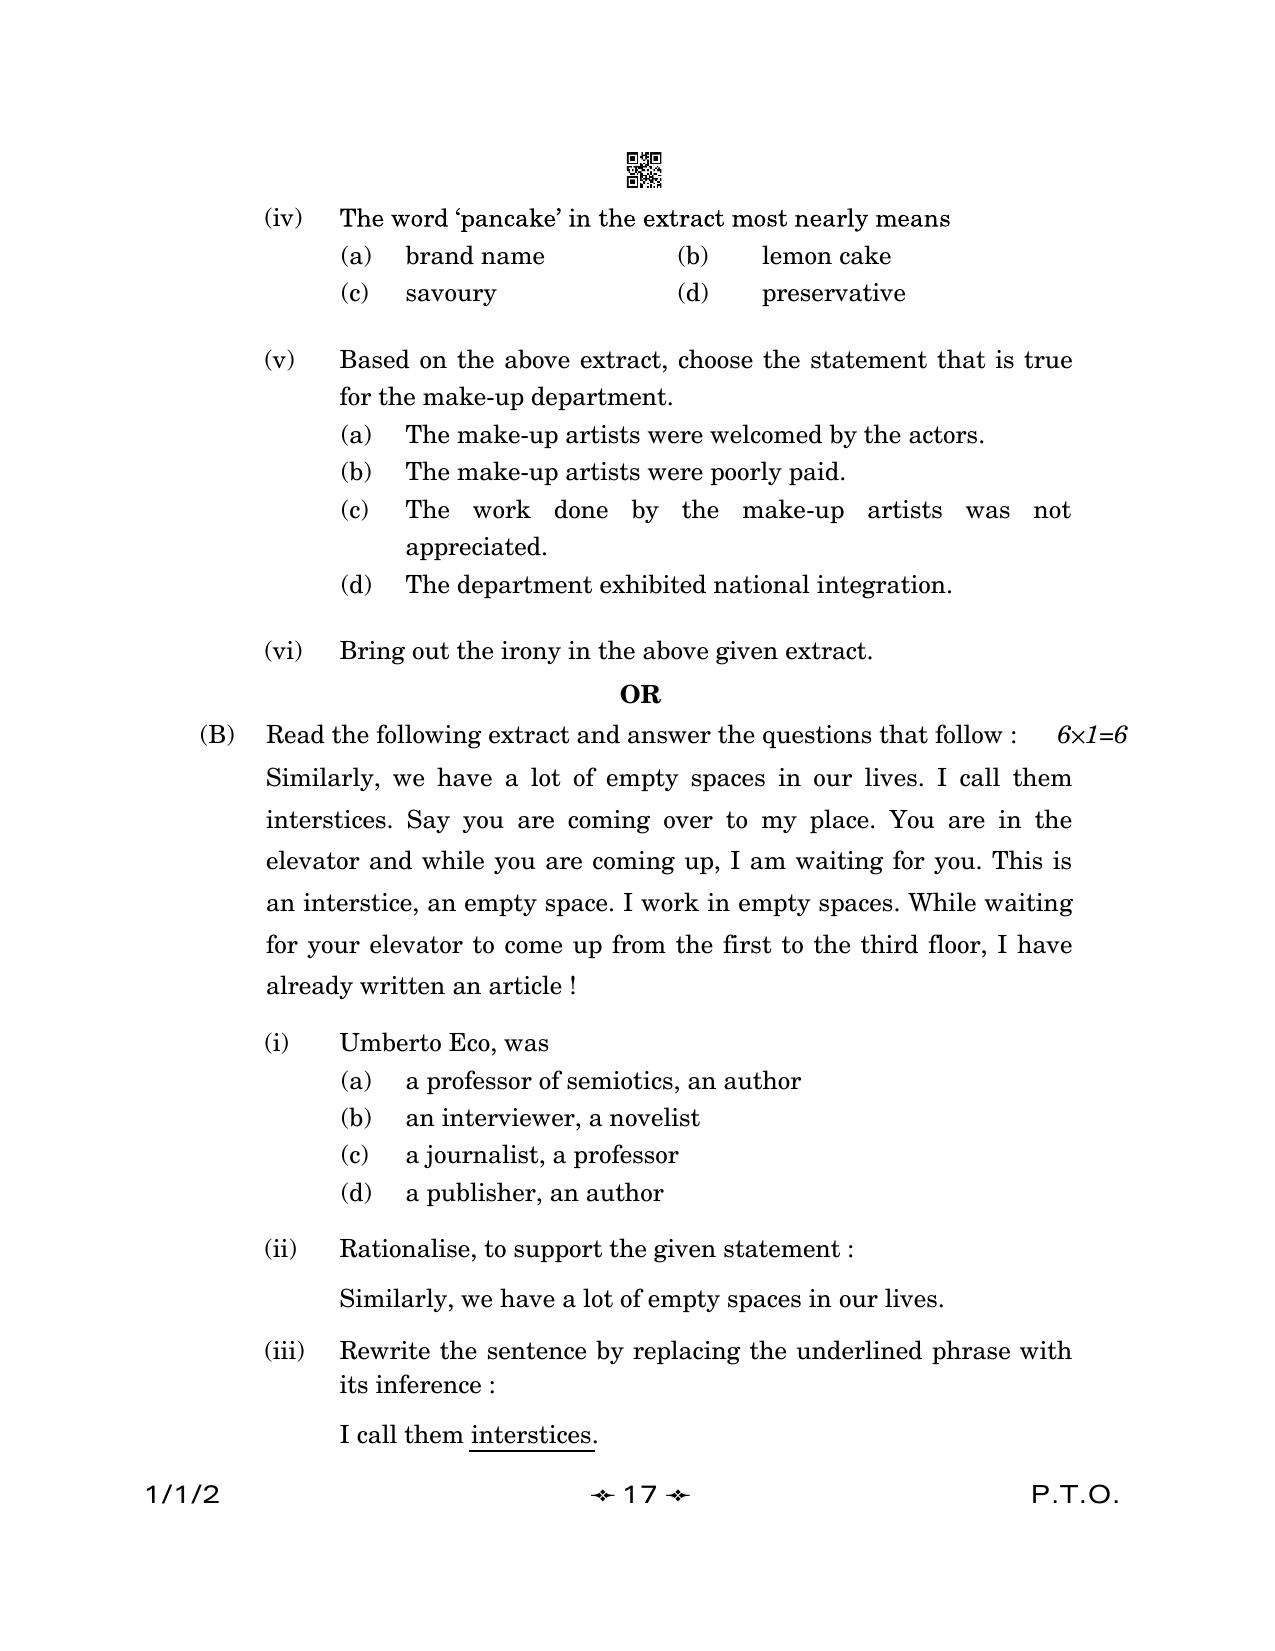 CBSE Class 12 1-1-2 English Core 2023 Question Paper - Page 17